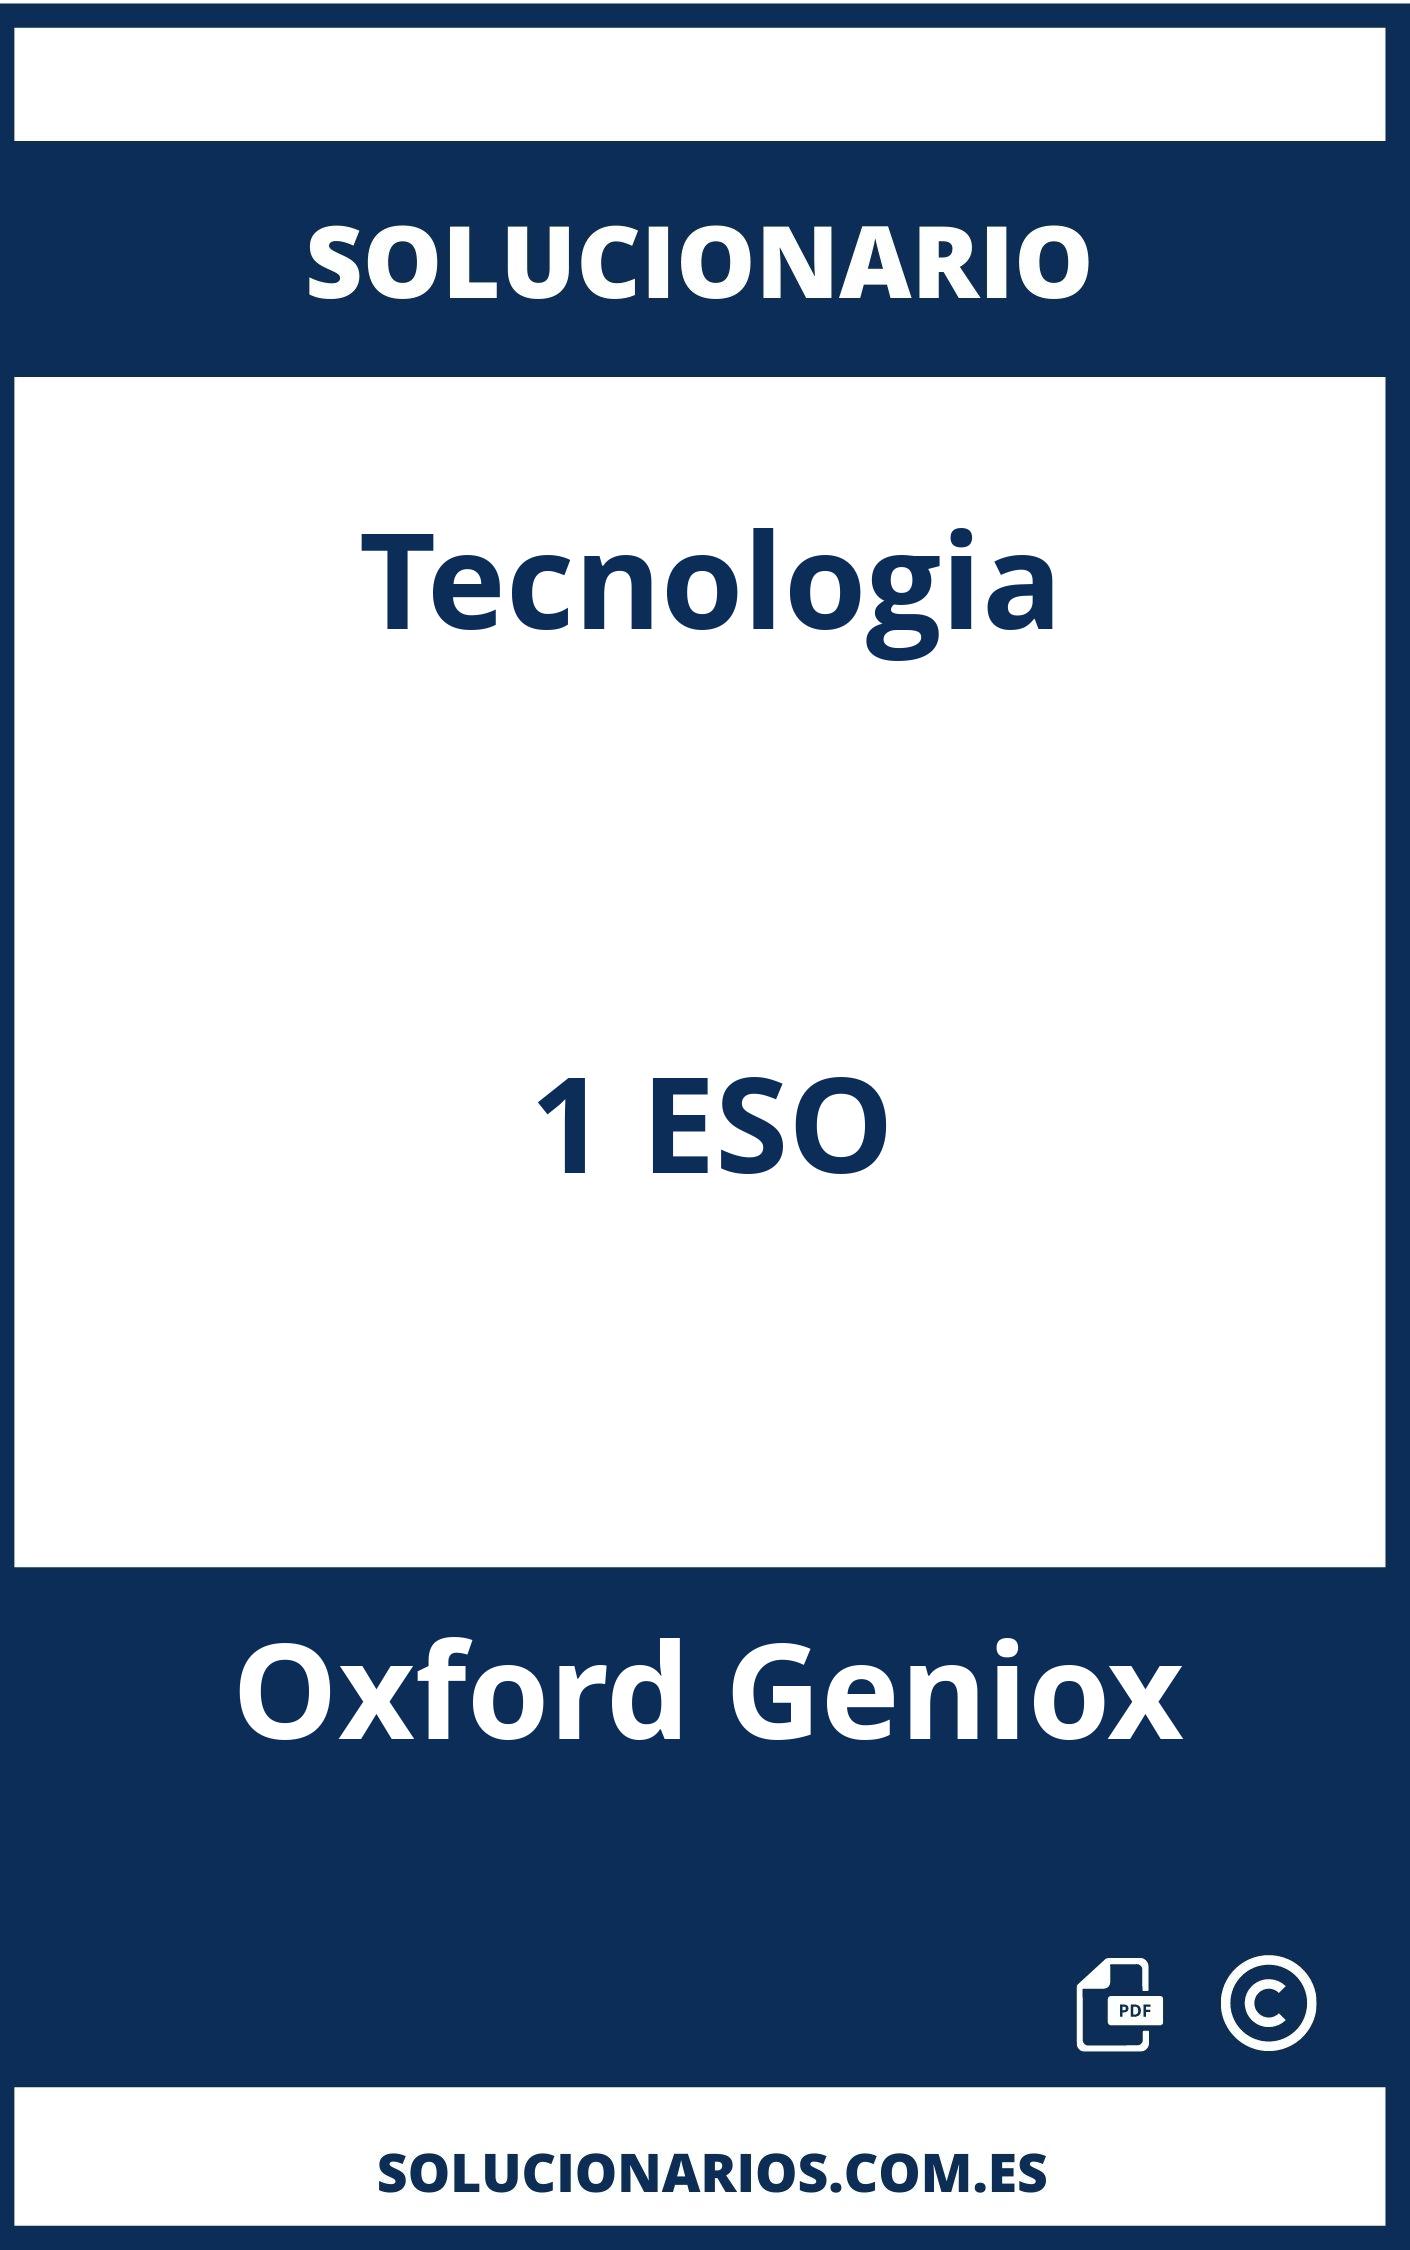 Solucionario Tecnologia 1 ESO Oxford Geniox